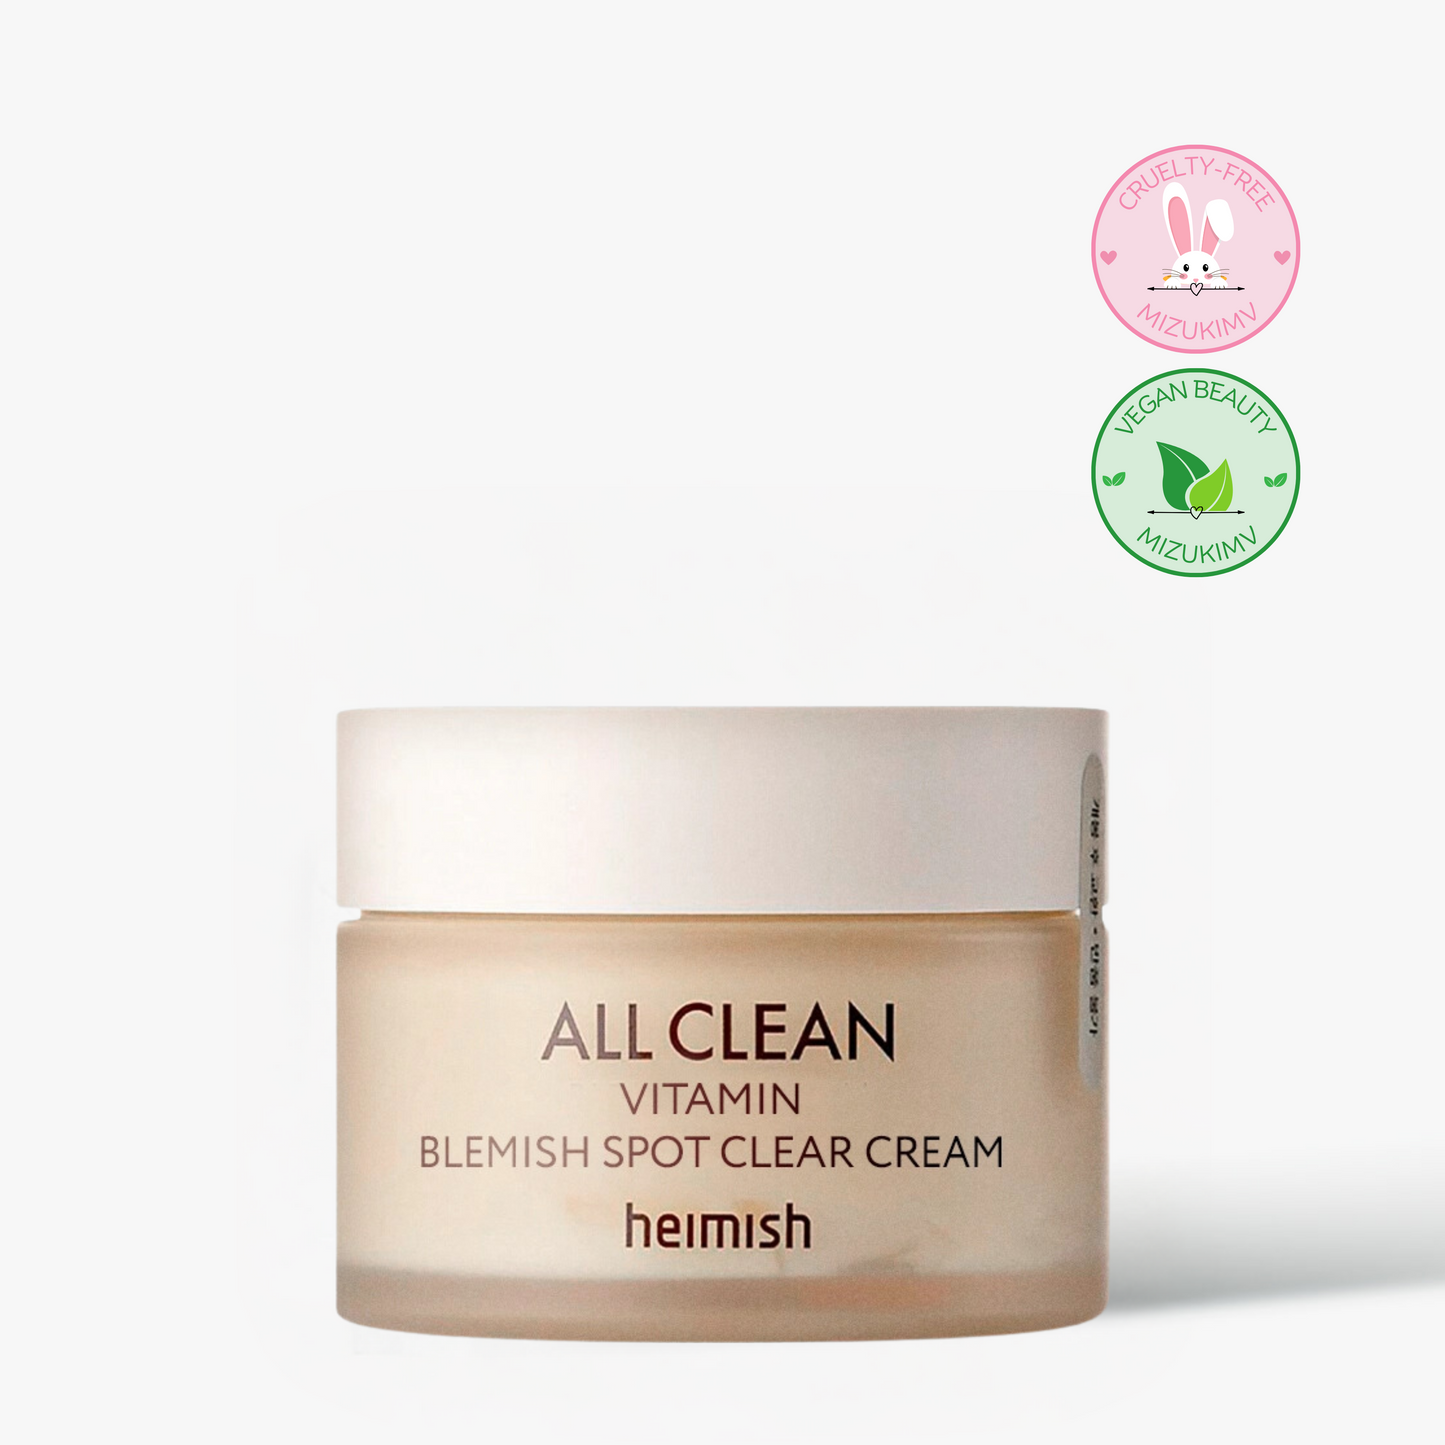 HEIMISH All Clean Vitamin Blemish Spot Clear Cream